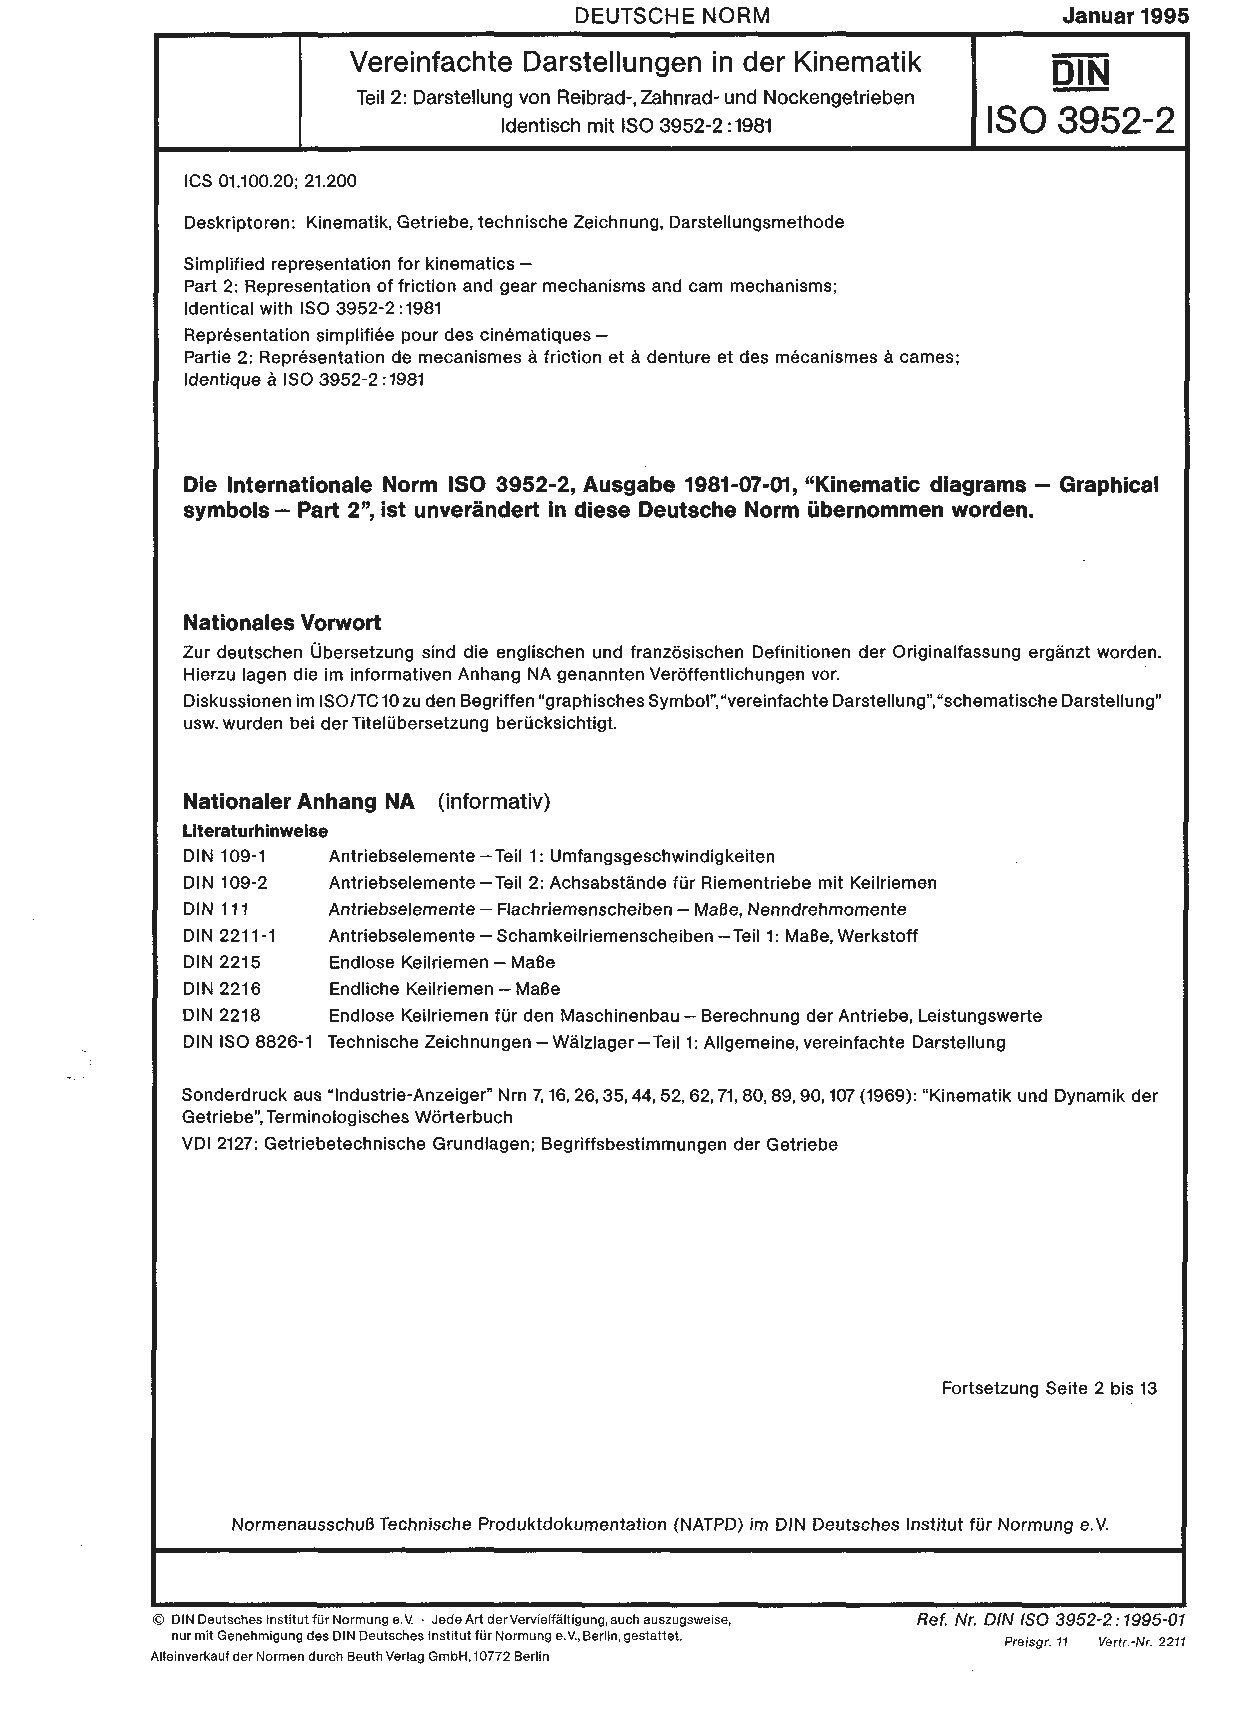 DIN ISO 3952-2:1995